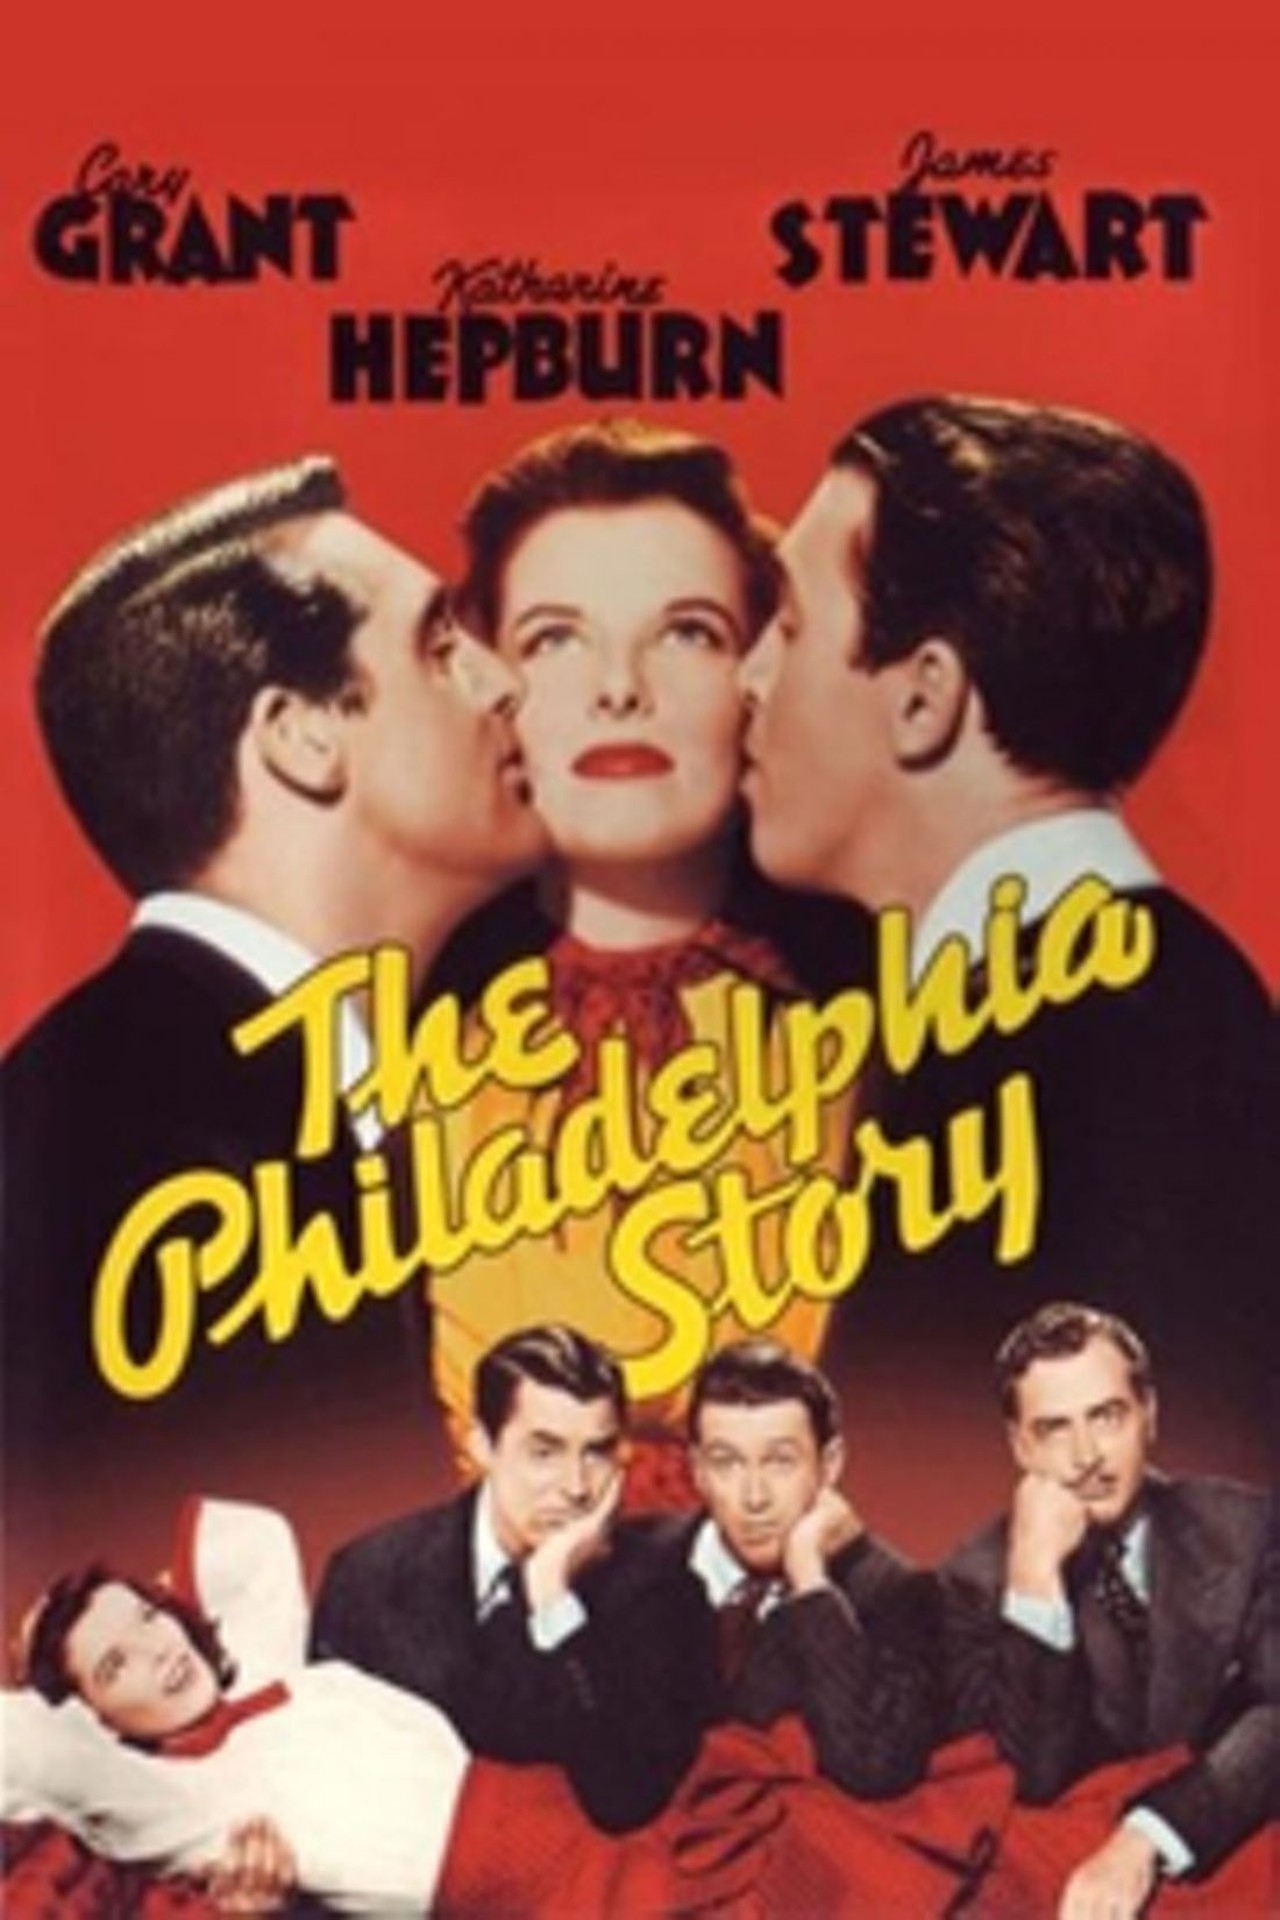  The Philadelphia Story Film Screening
Wed, Feb. 26-Sun, March 1
Film Poster Artwork